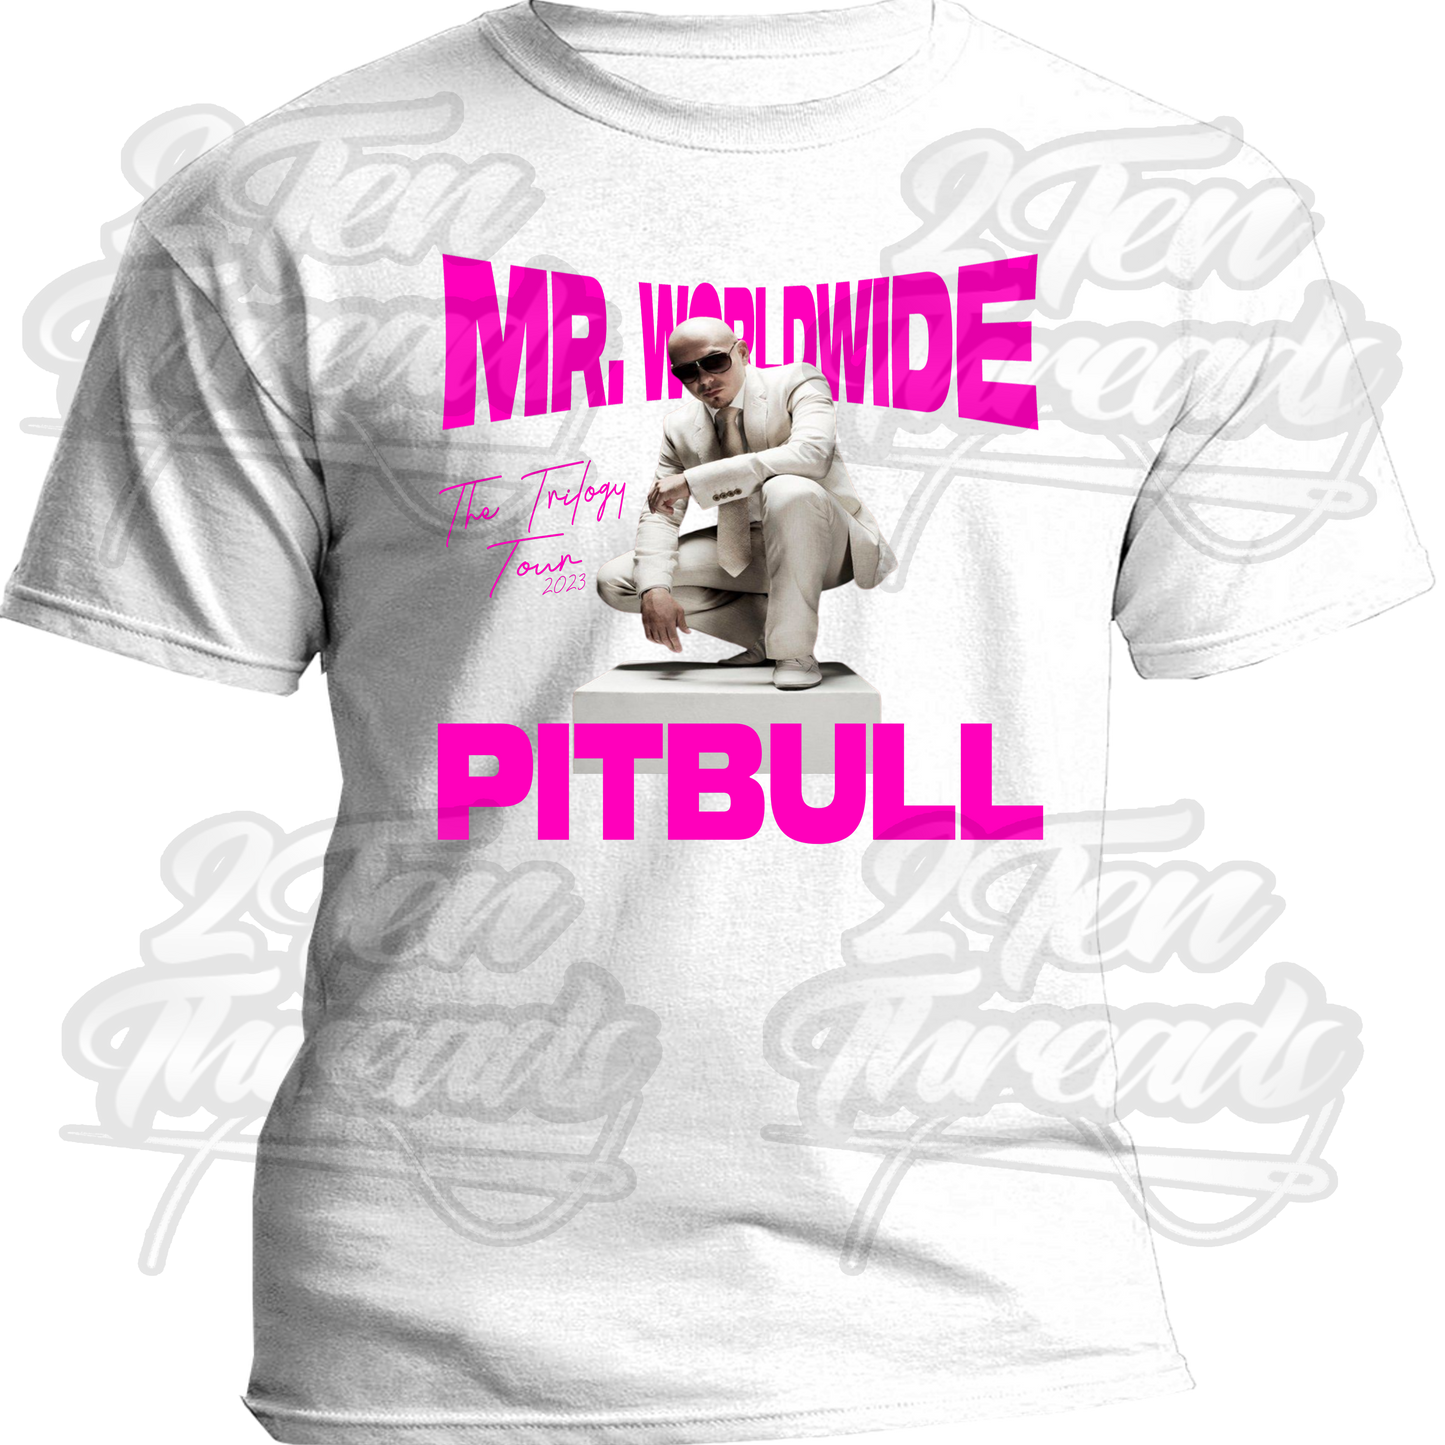 Mr. Worldwide Trilogy Shirt